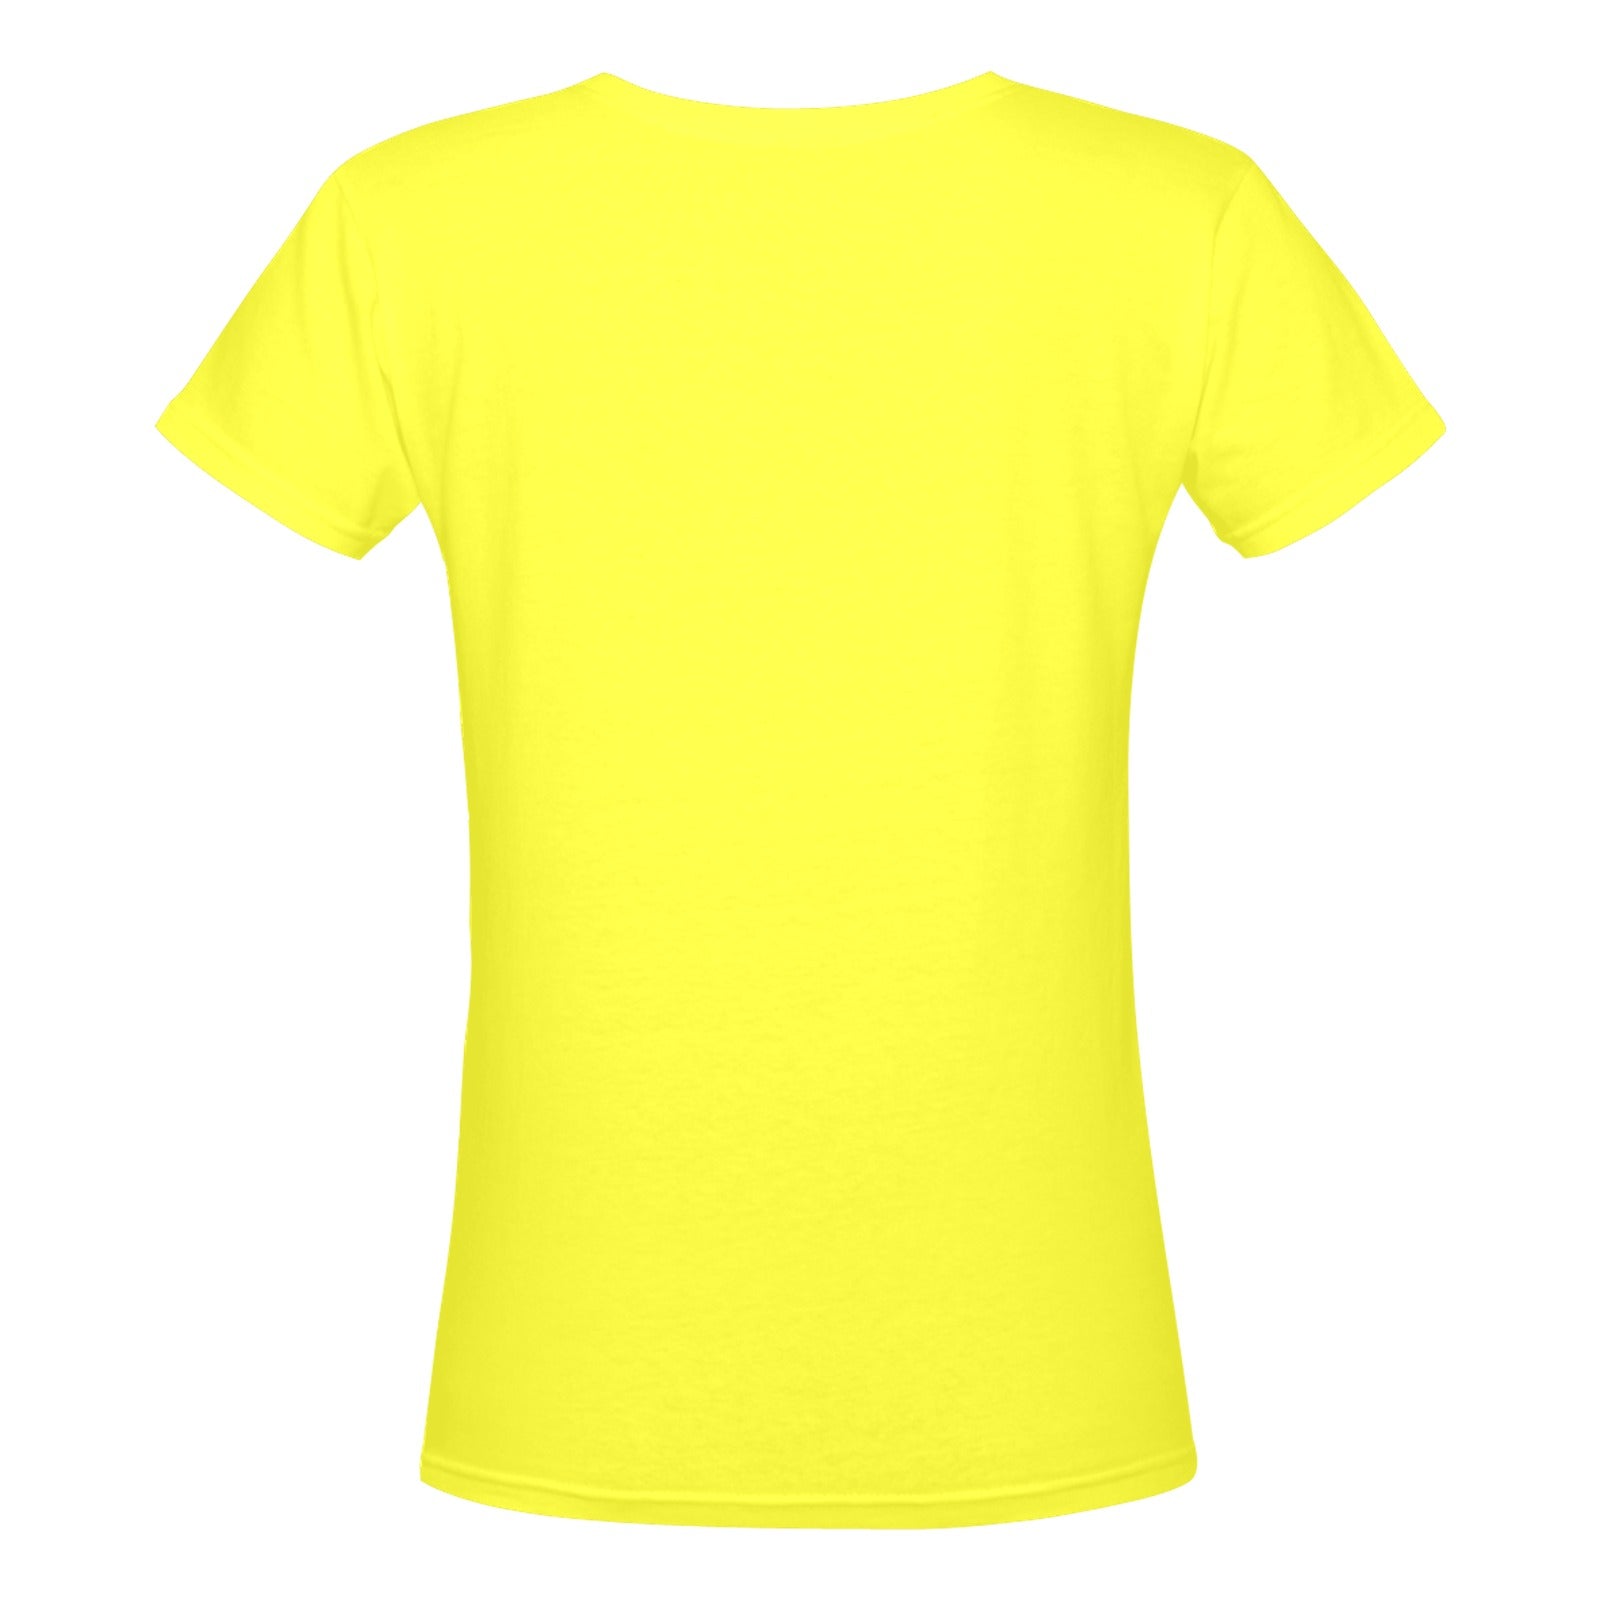 Balloon Twister Shirt Yellow